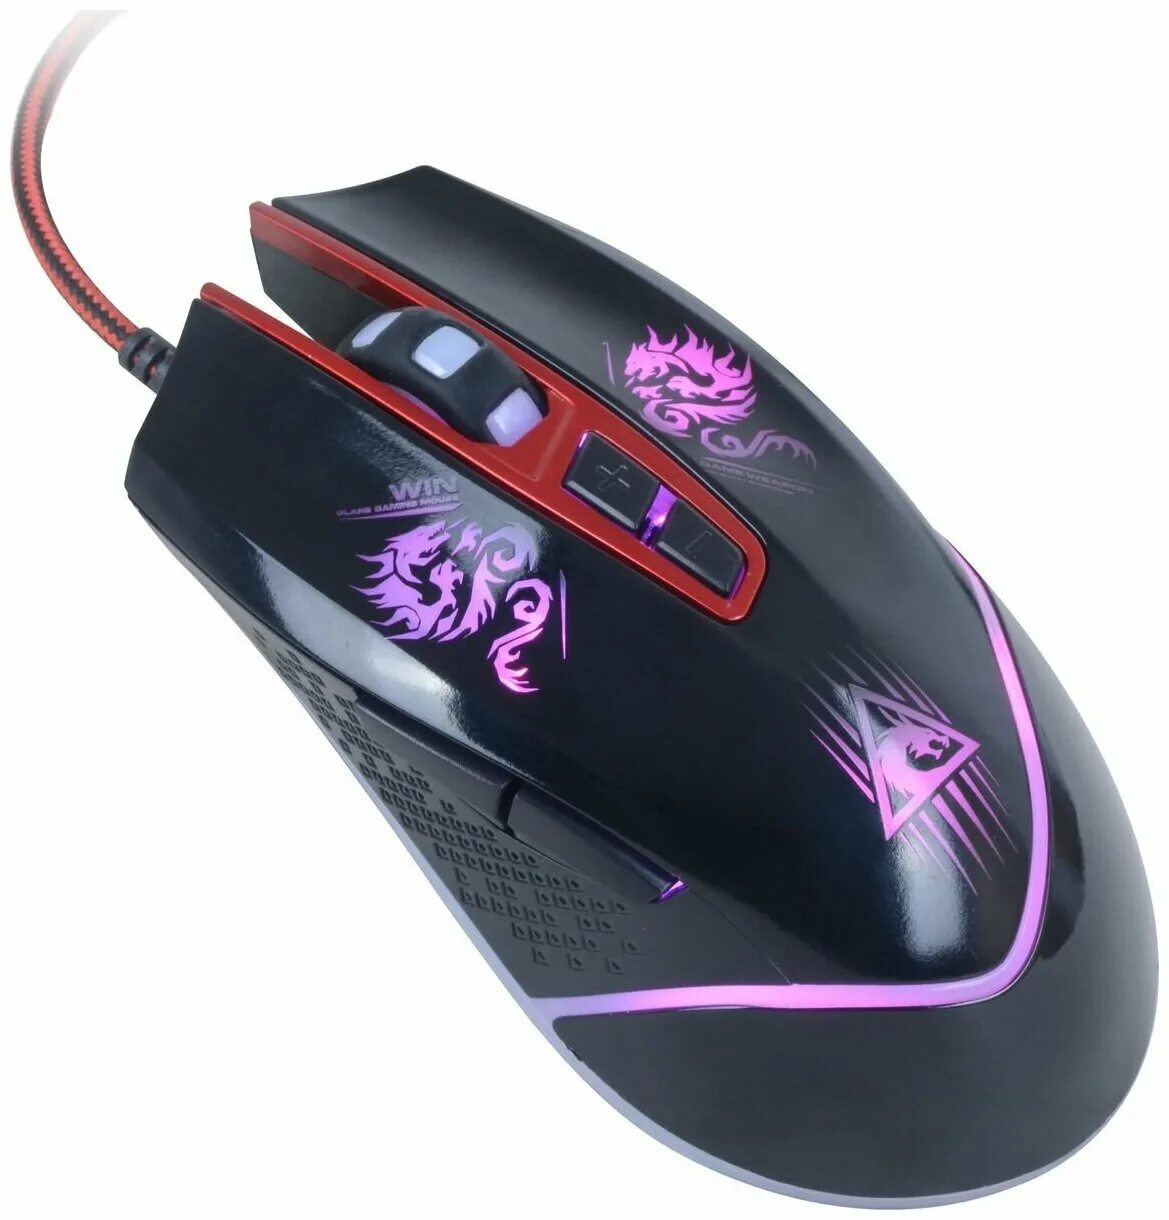 Defender gm 502. Xtrike me GM-502. GM 502 мышь. Геймерская мышь. Мышка компьютерная геймерская.